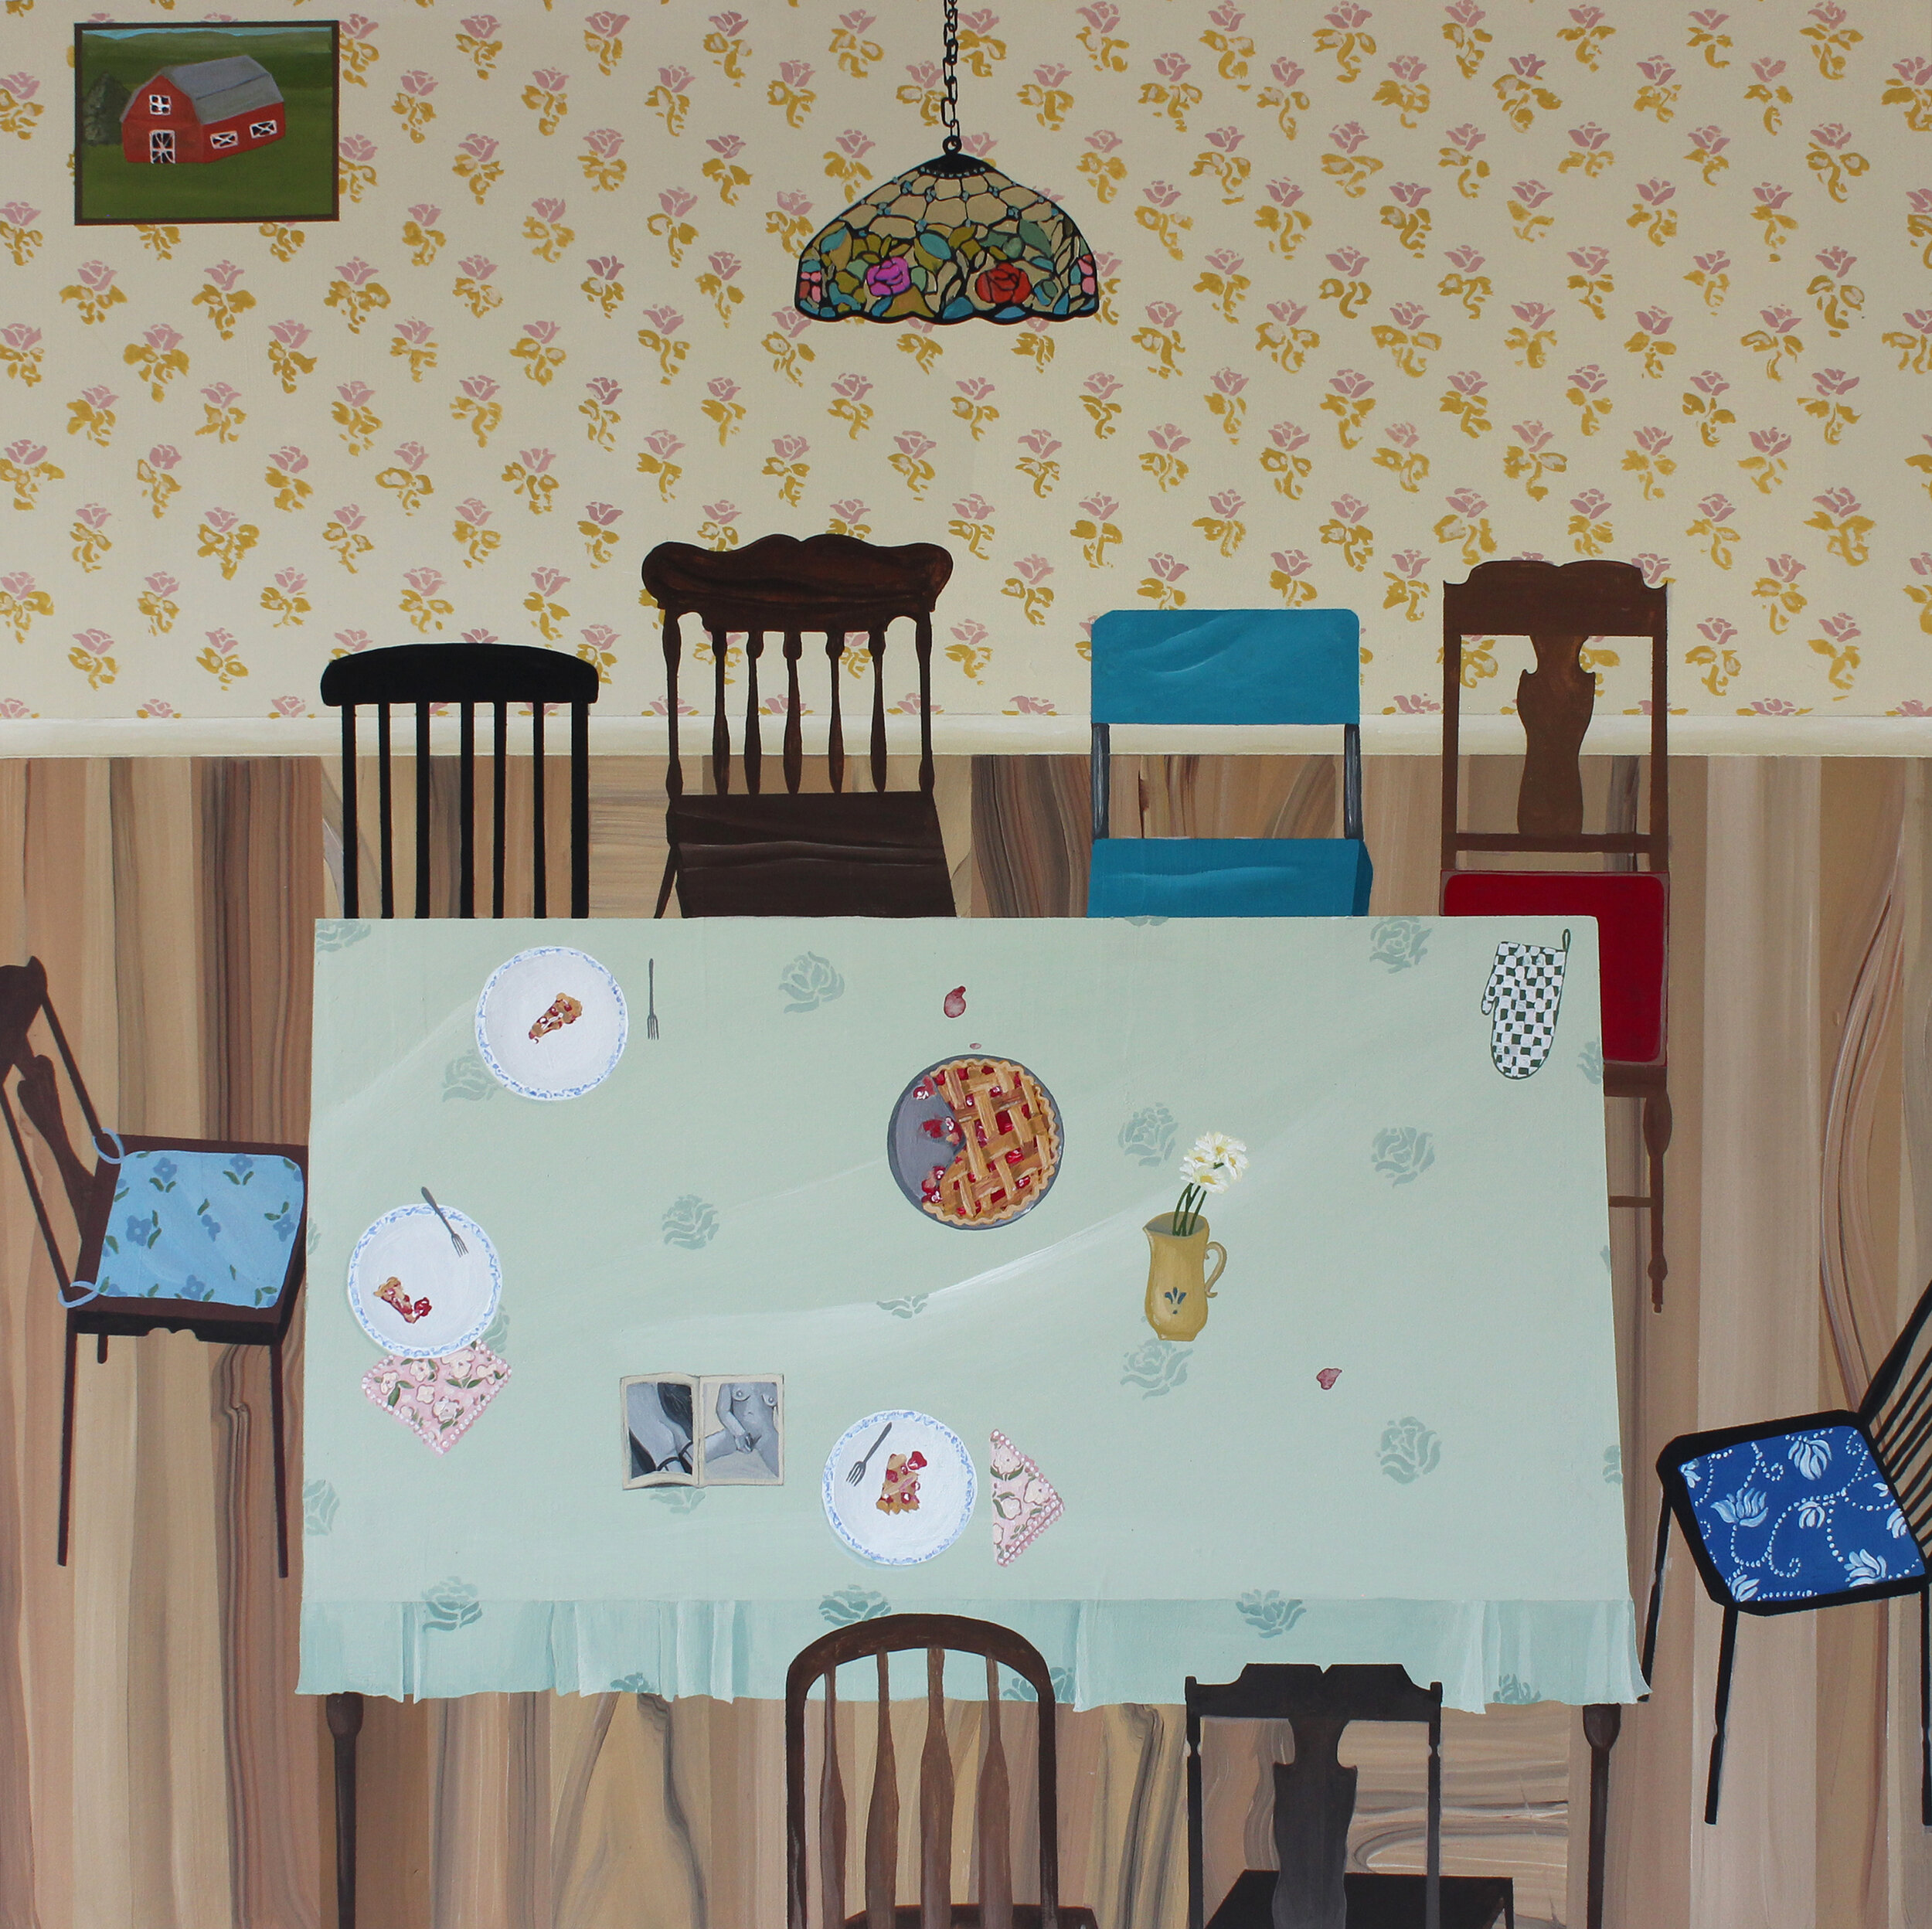 ANNE BUCKWALTER | Cherry Pie, 24 x 24 inches / 61 x 61 cm, gouache on panel, 2021